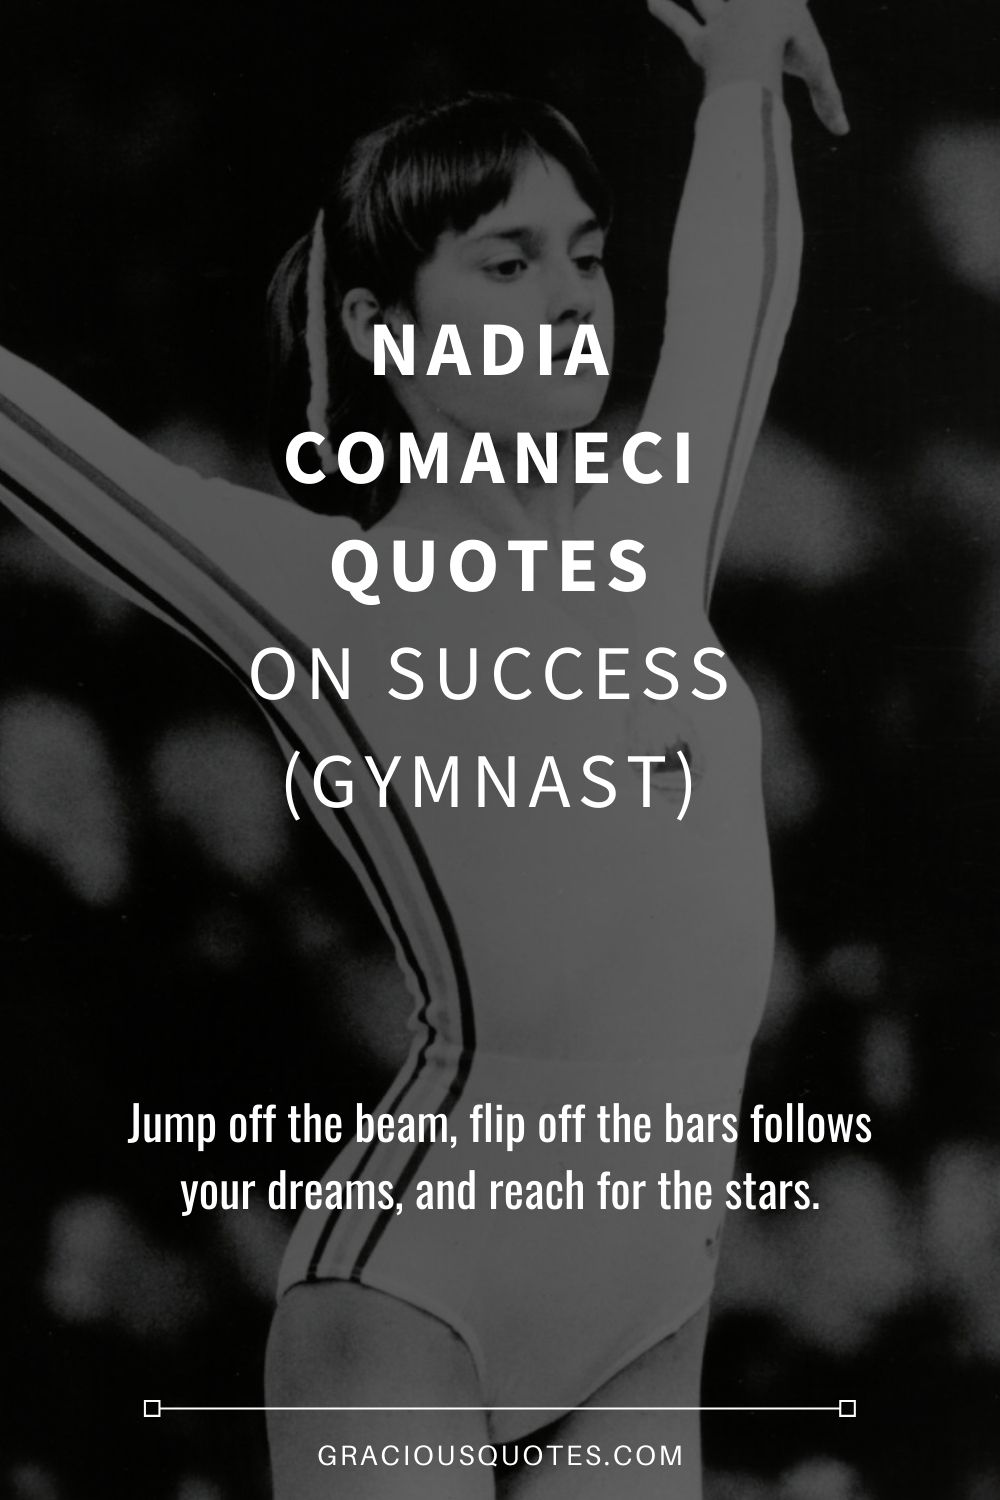 Nadia Comaneci Quotes on Success (GYMNAST) - Gracious Quotes